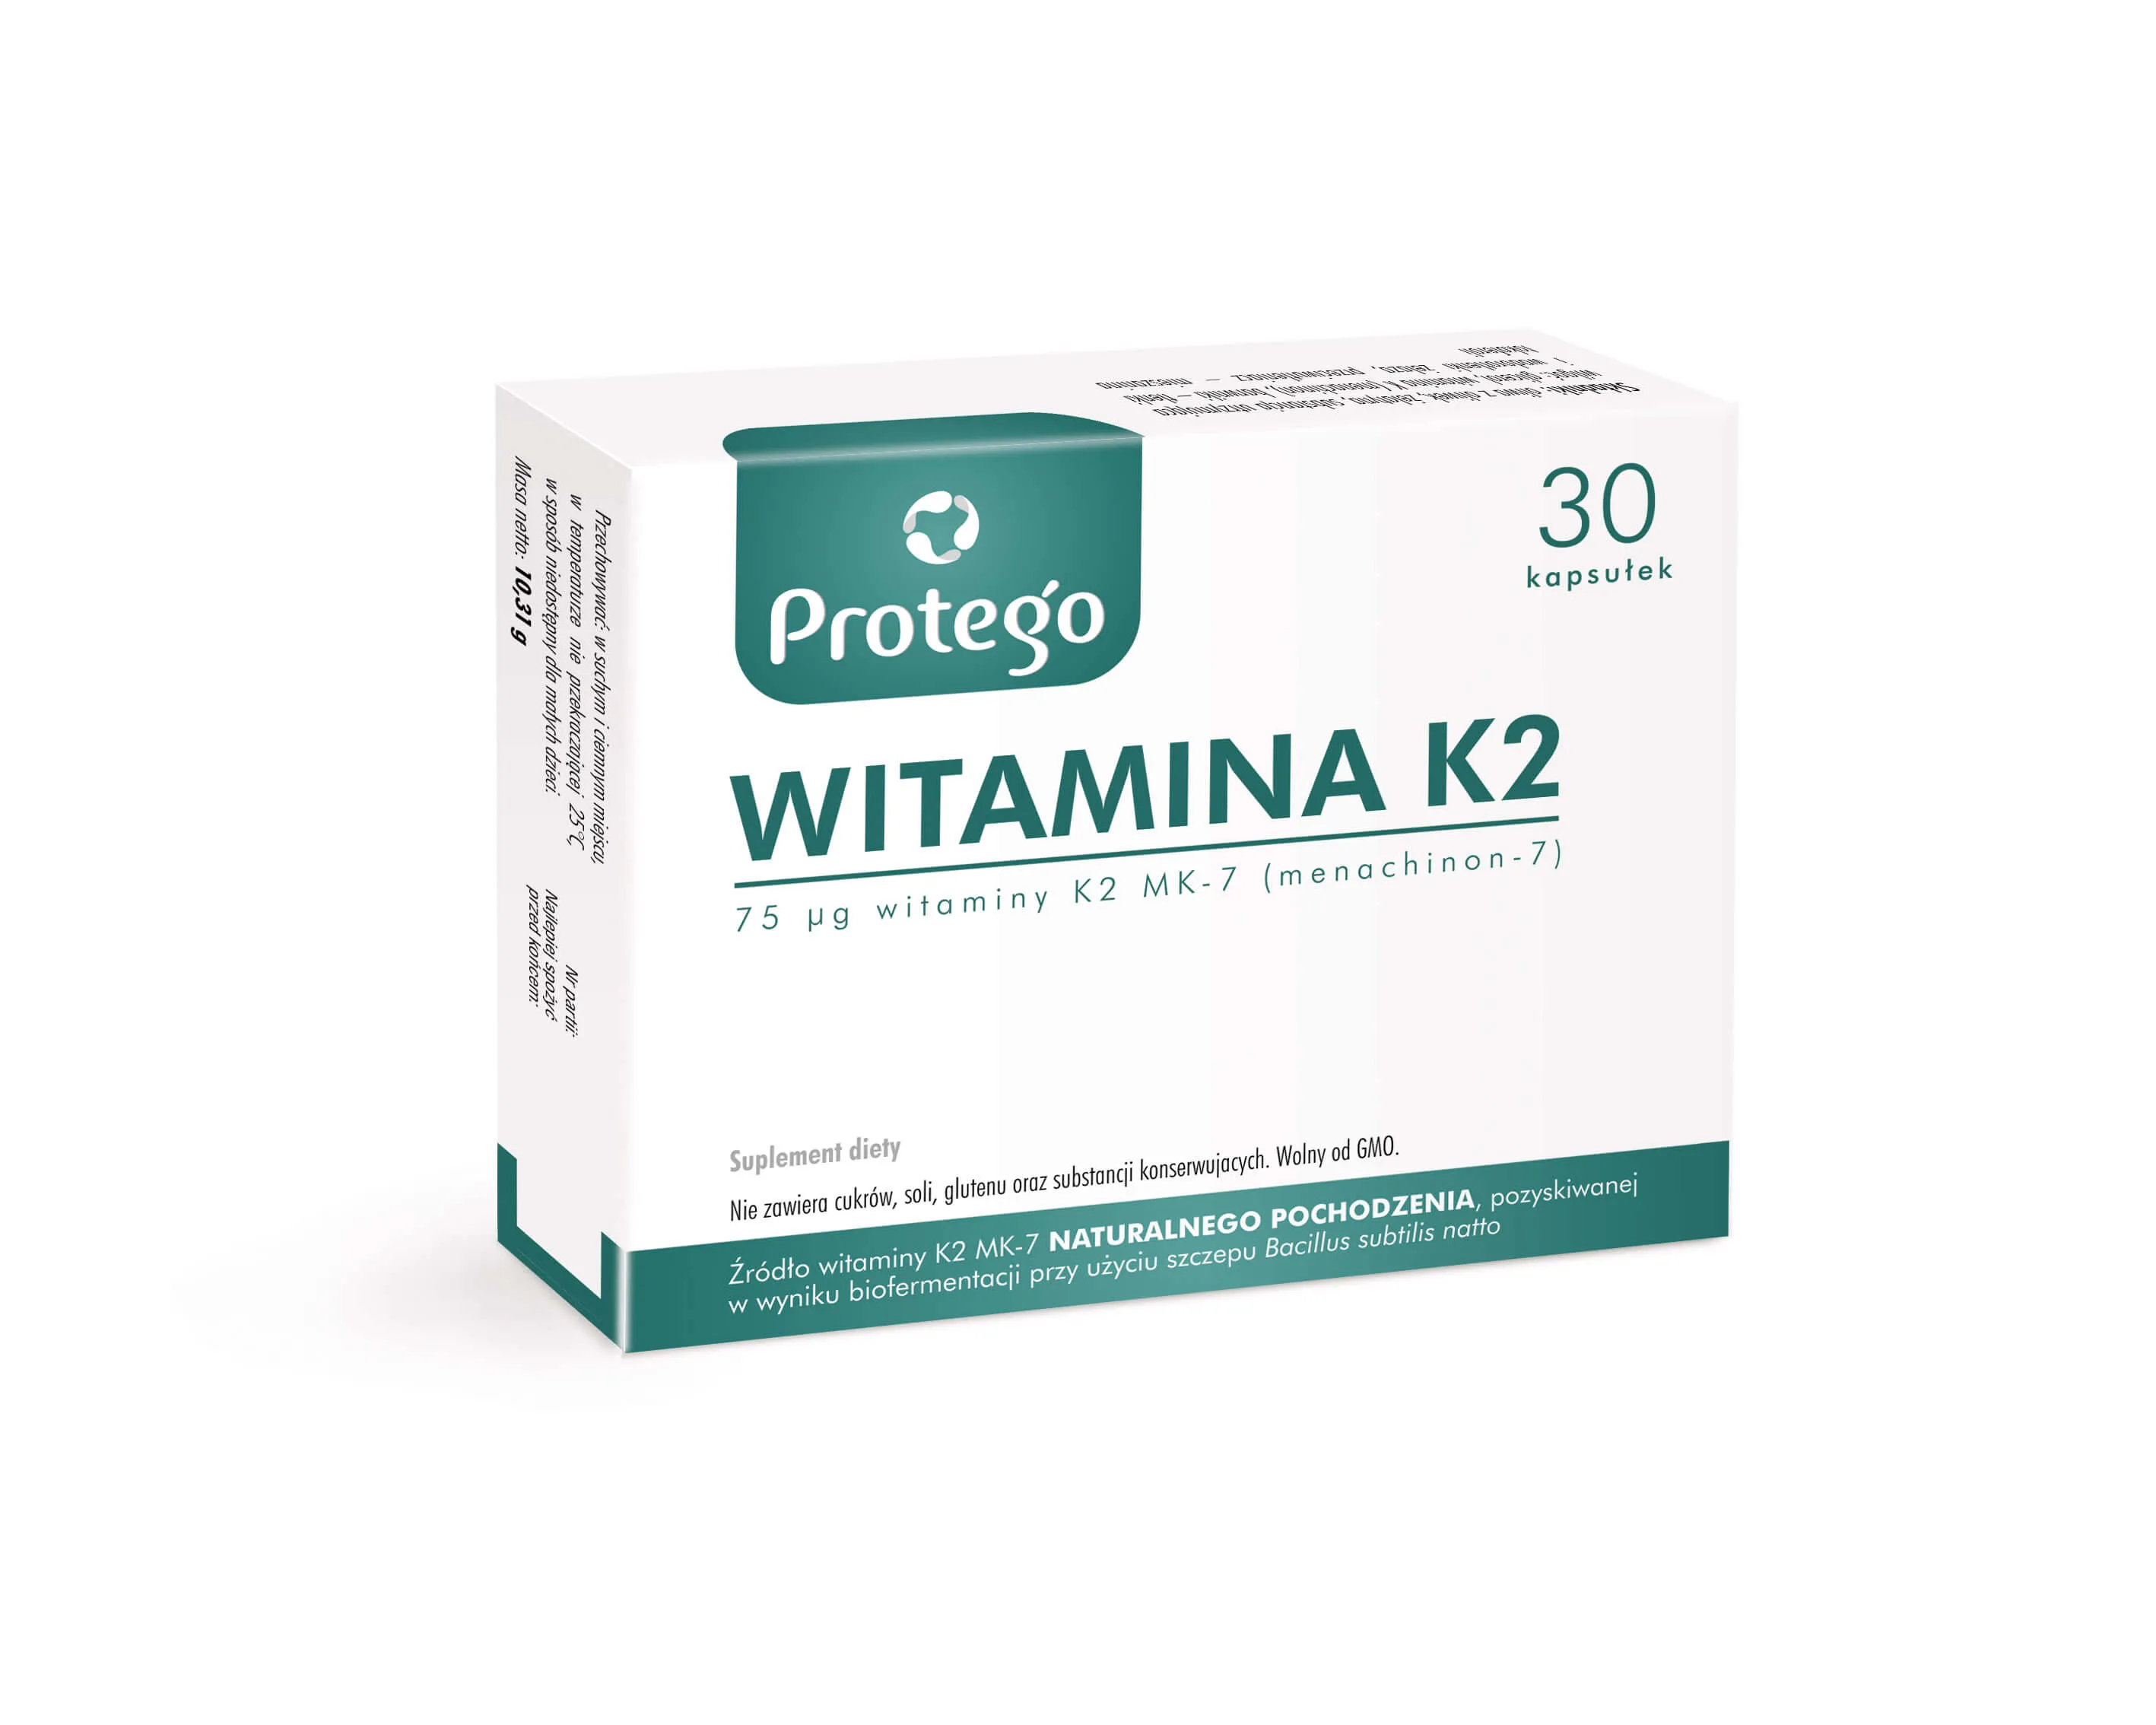 Protego Witamina K2, suplement diety, 30 kapsułek